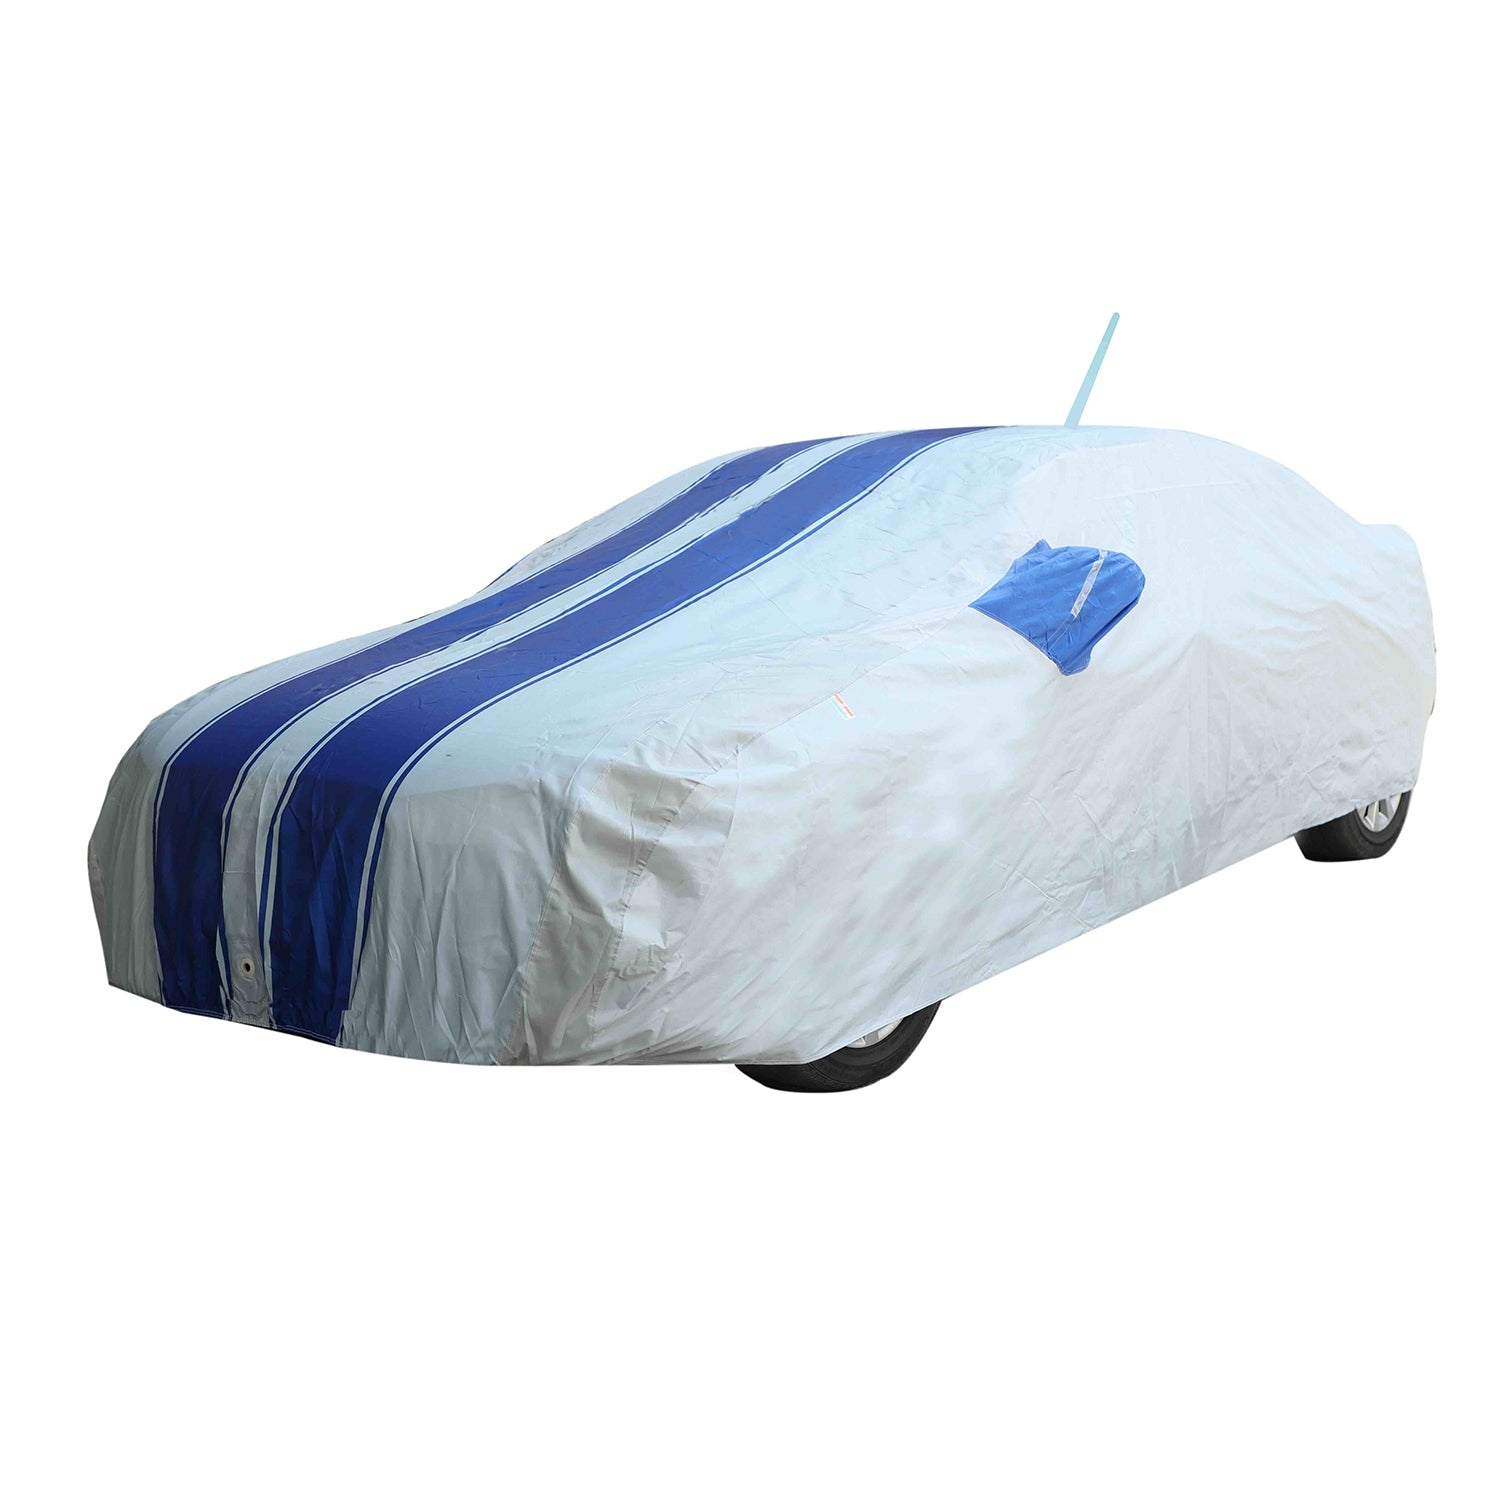 Maruti Suzuki Swift 100% Waterproof Car Body Cover With Mirror Pockets By  Bull Rider